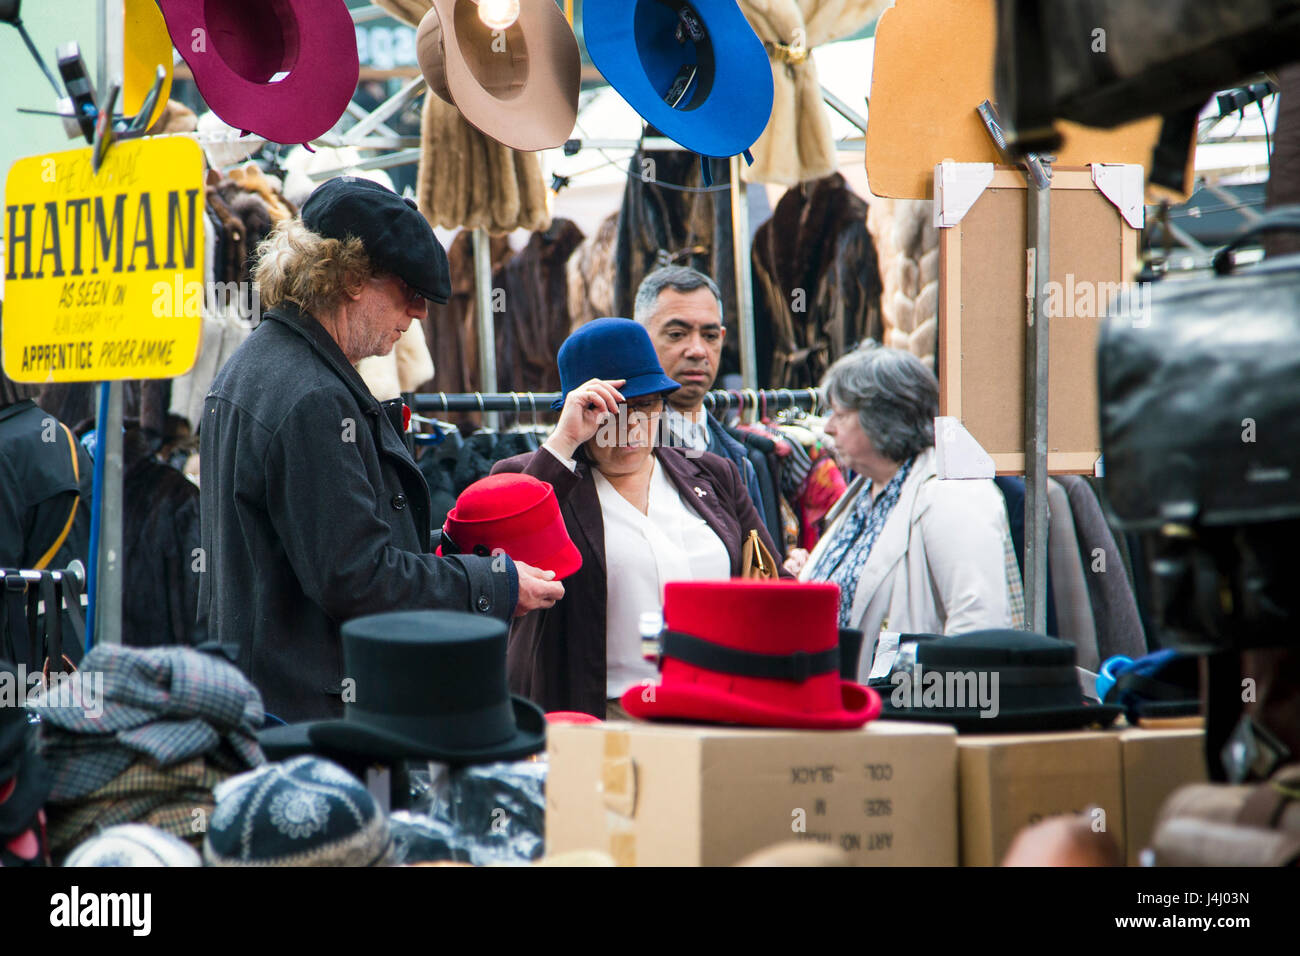 Couple trying on hats at Spitalfields Market, London, UK Stock Photo